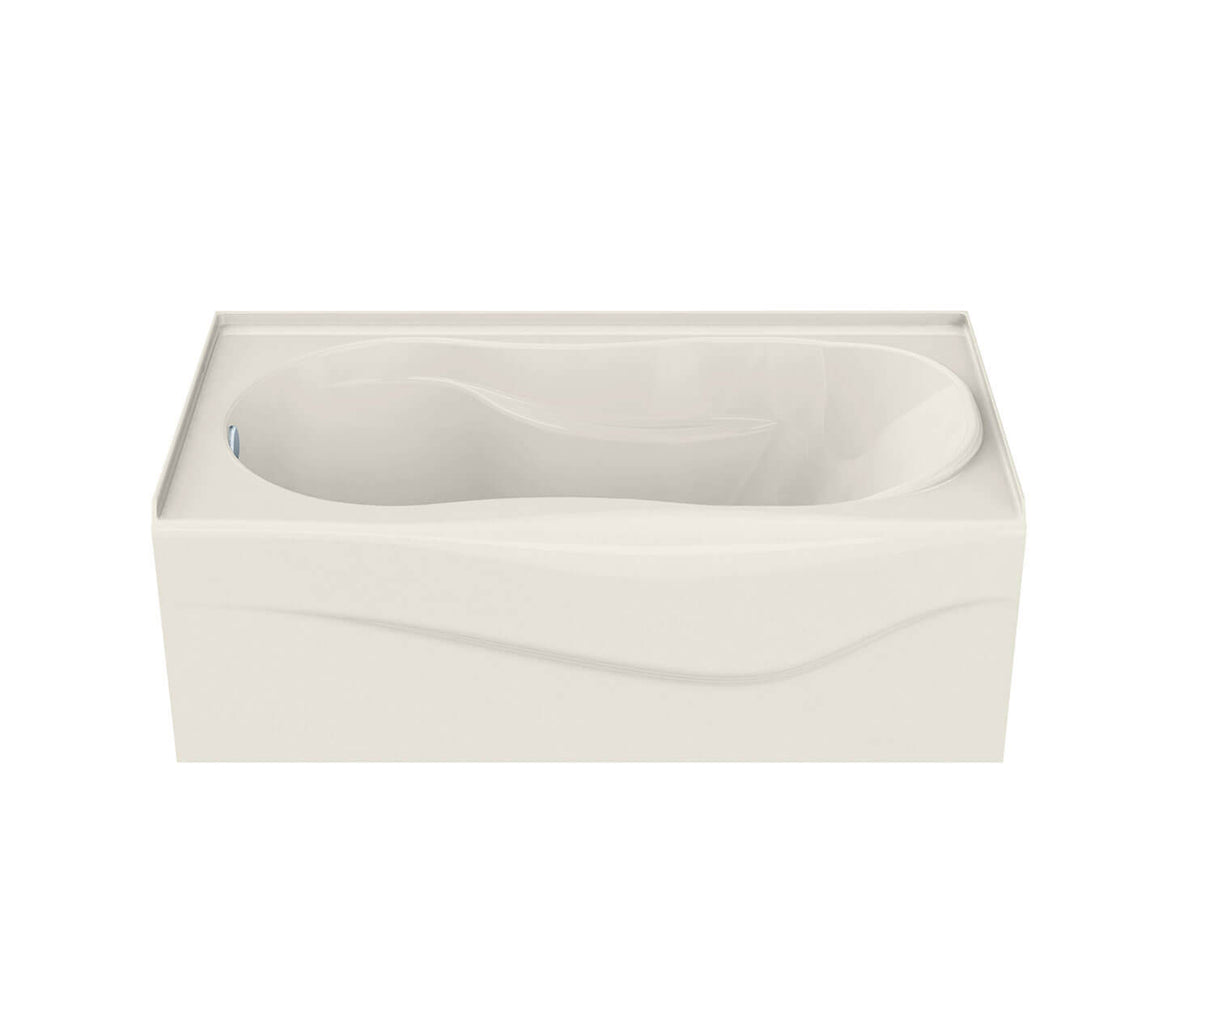 MAAX 105726-R-000-007 Murmur 6032 A Acrylic Alcove Right-Hand Drain Bathtub in Biscuit